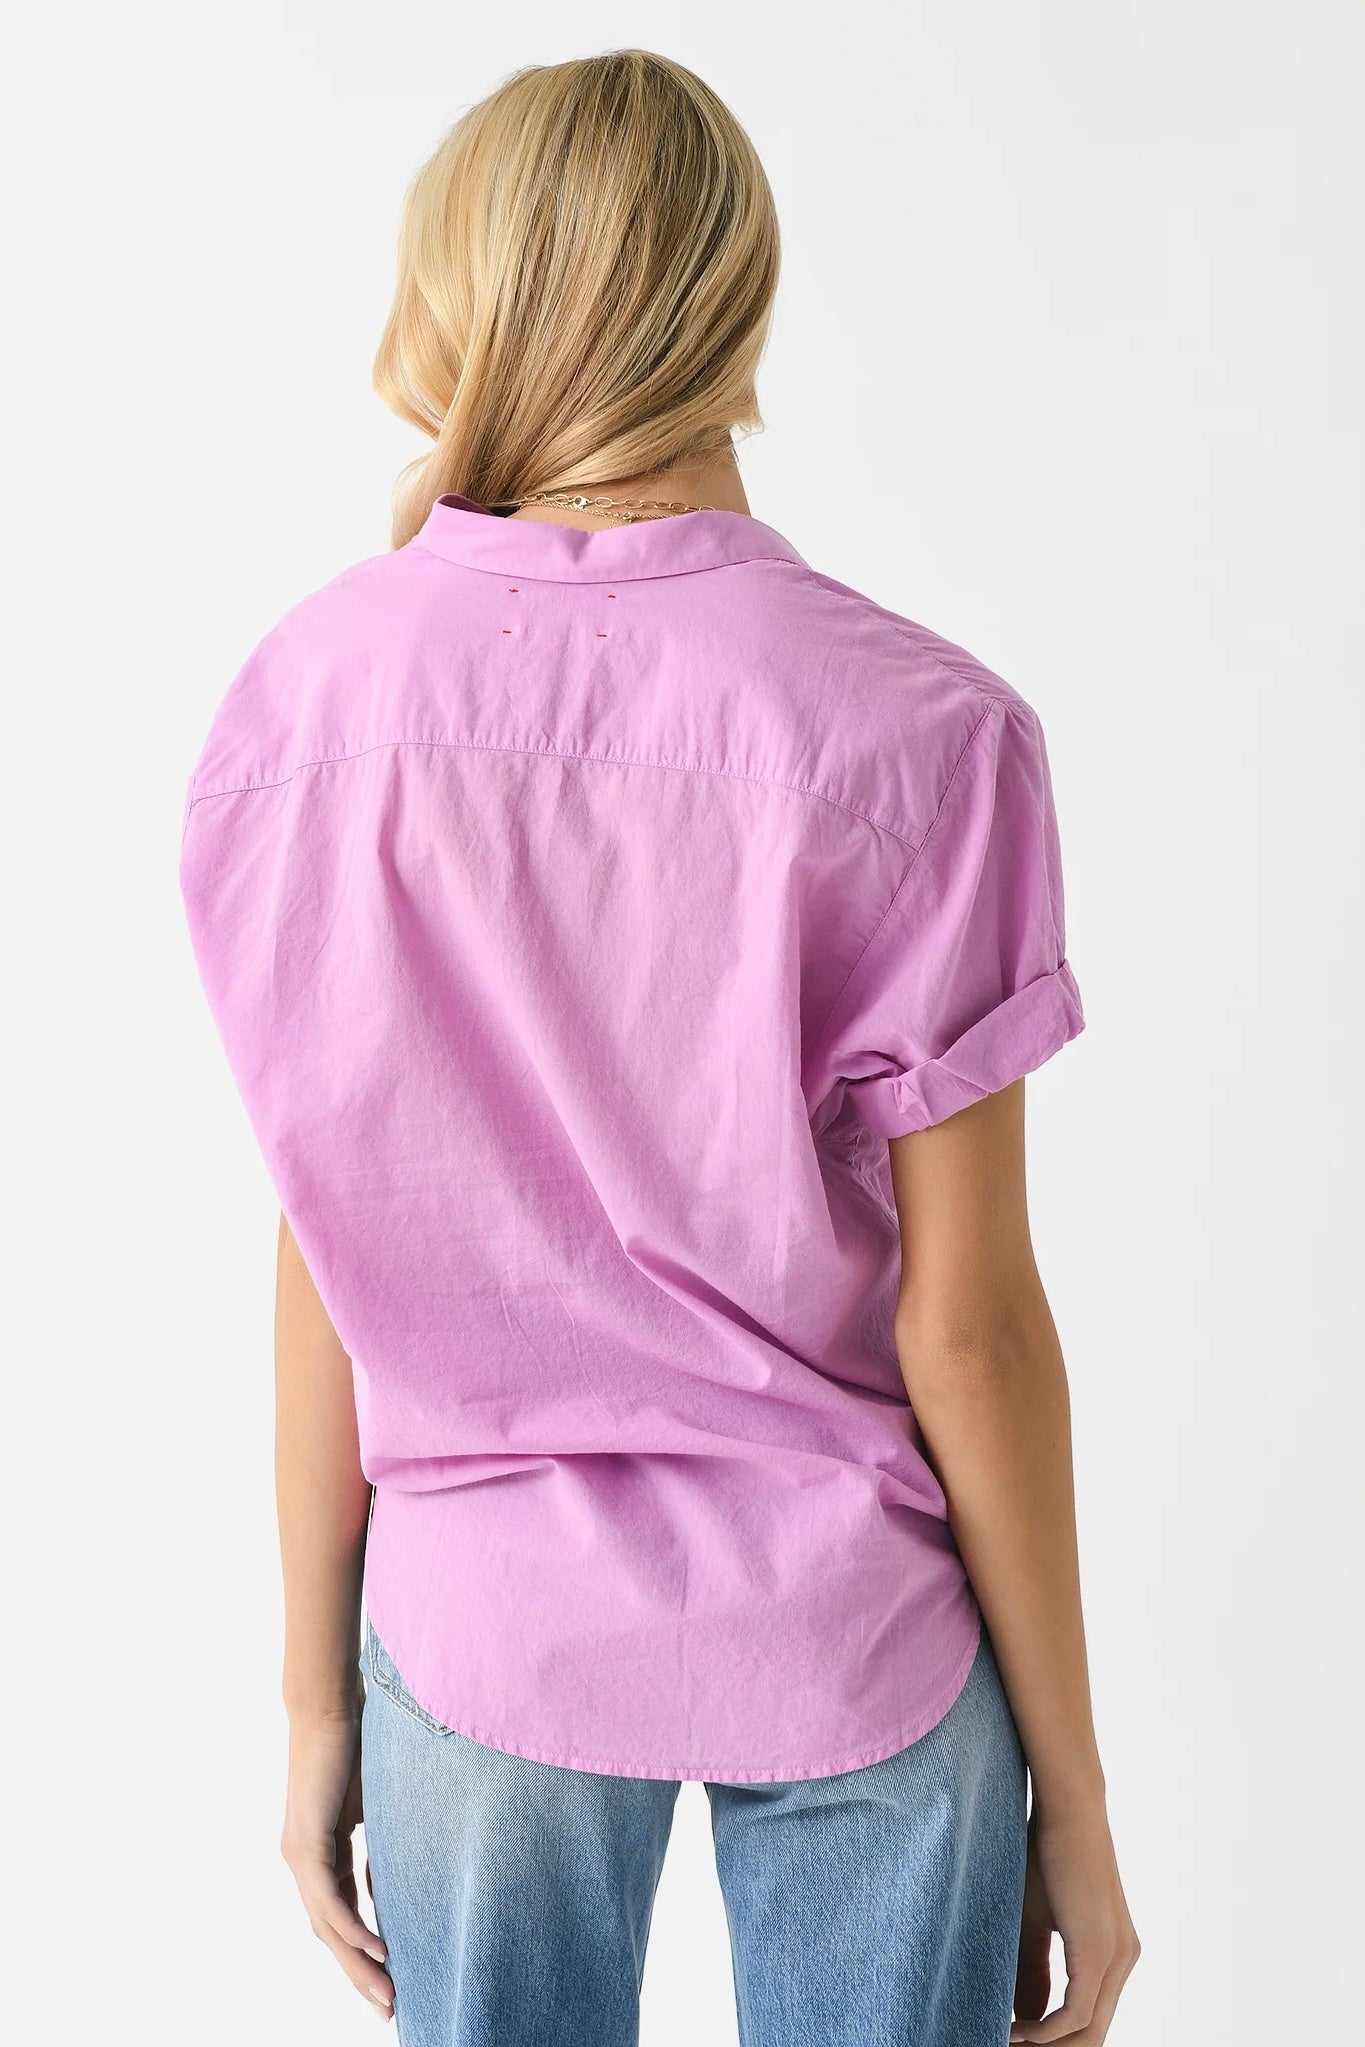 Xirena - Channing Short Sleeve Shirt